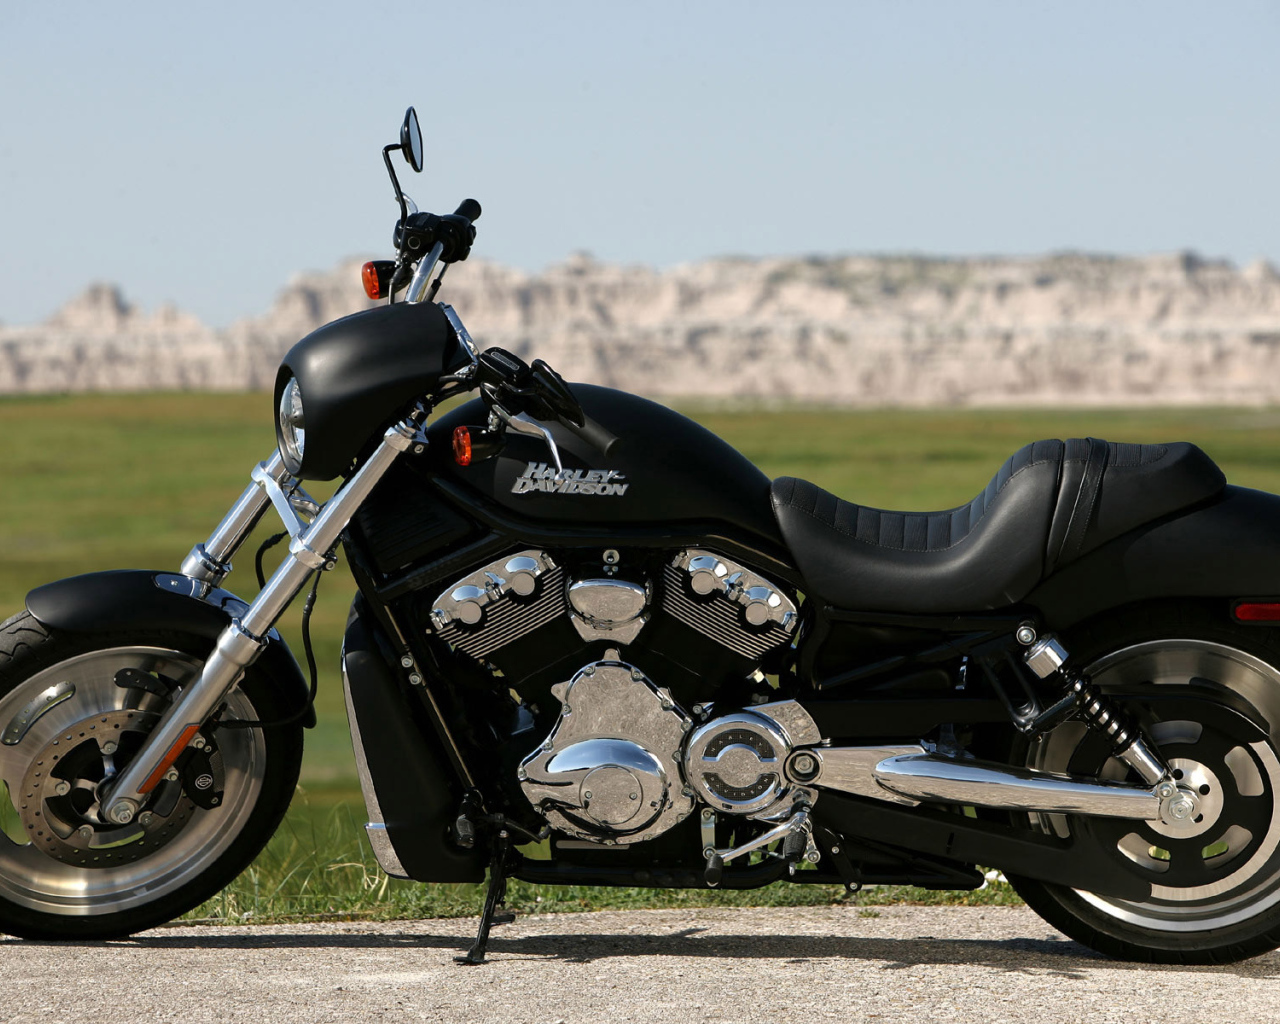 Black Harley Davidson motorcycle